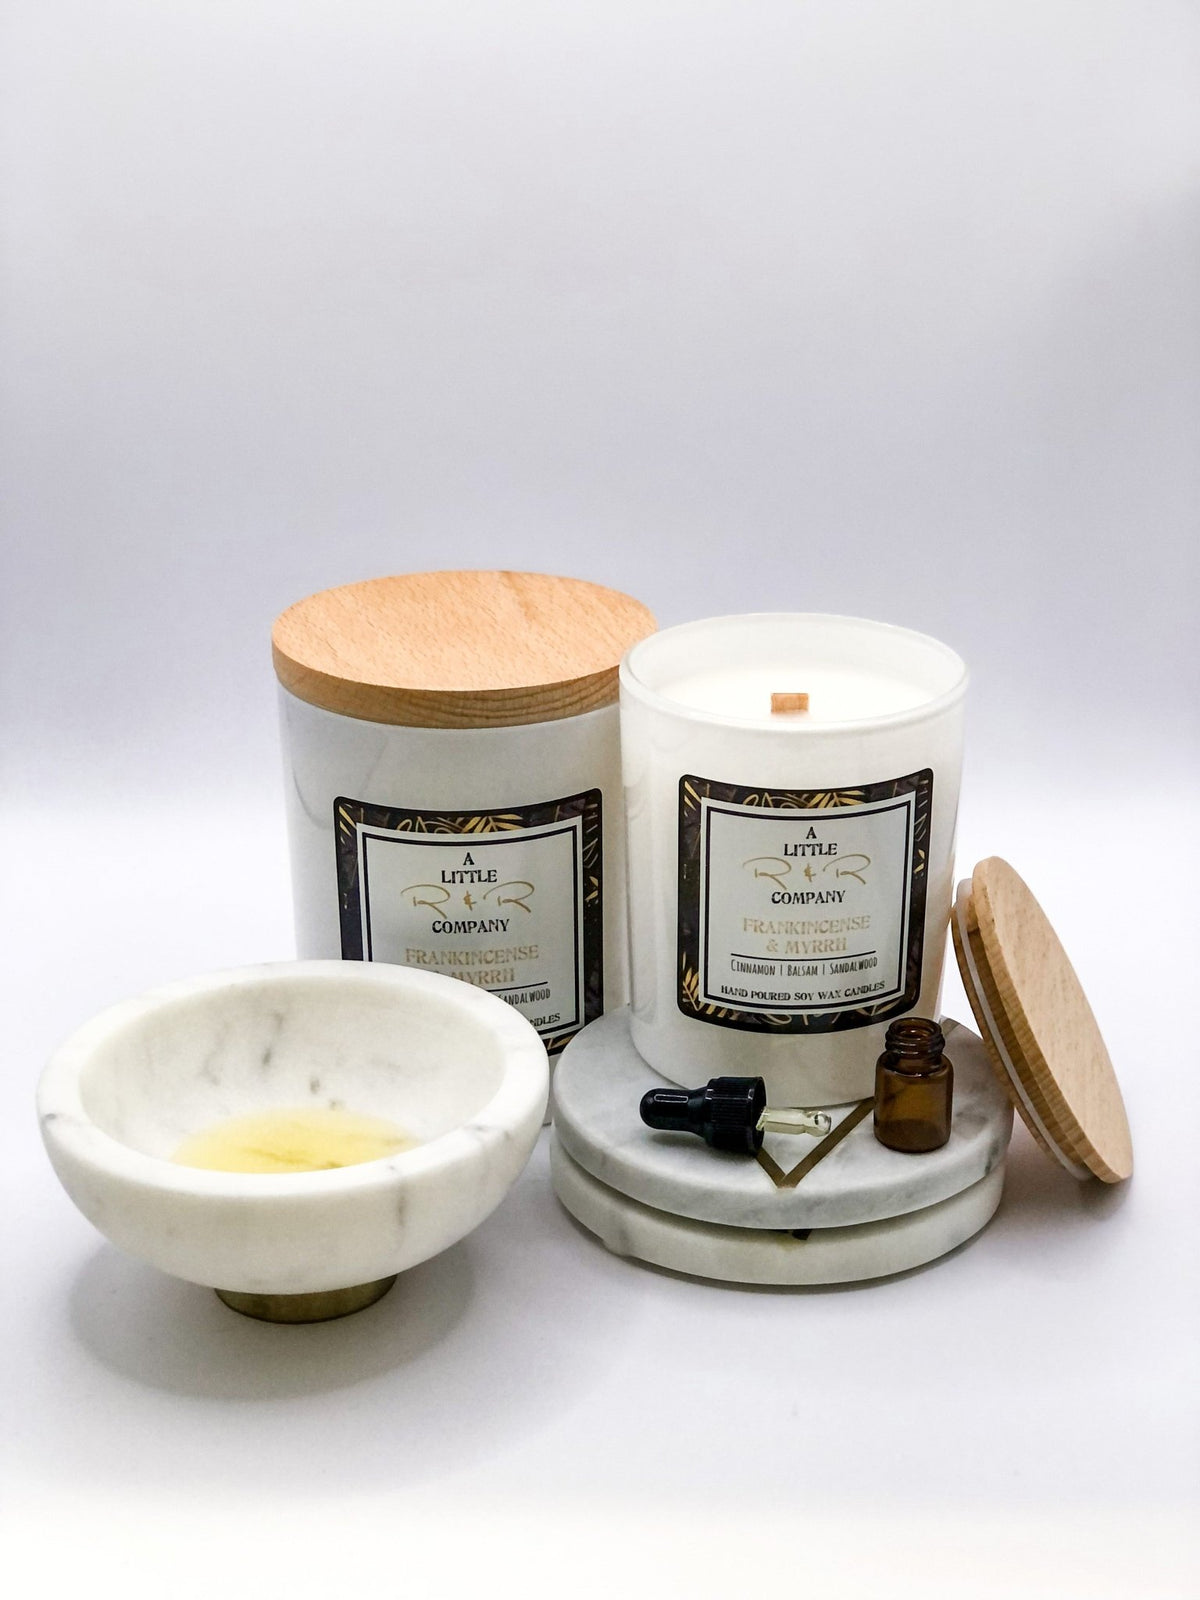 Frankincense & Myrrh Handmade Soy Wax Candle - alittlernrcompany